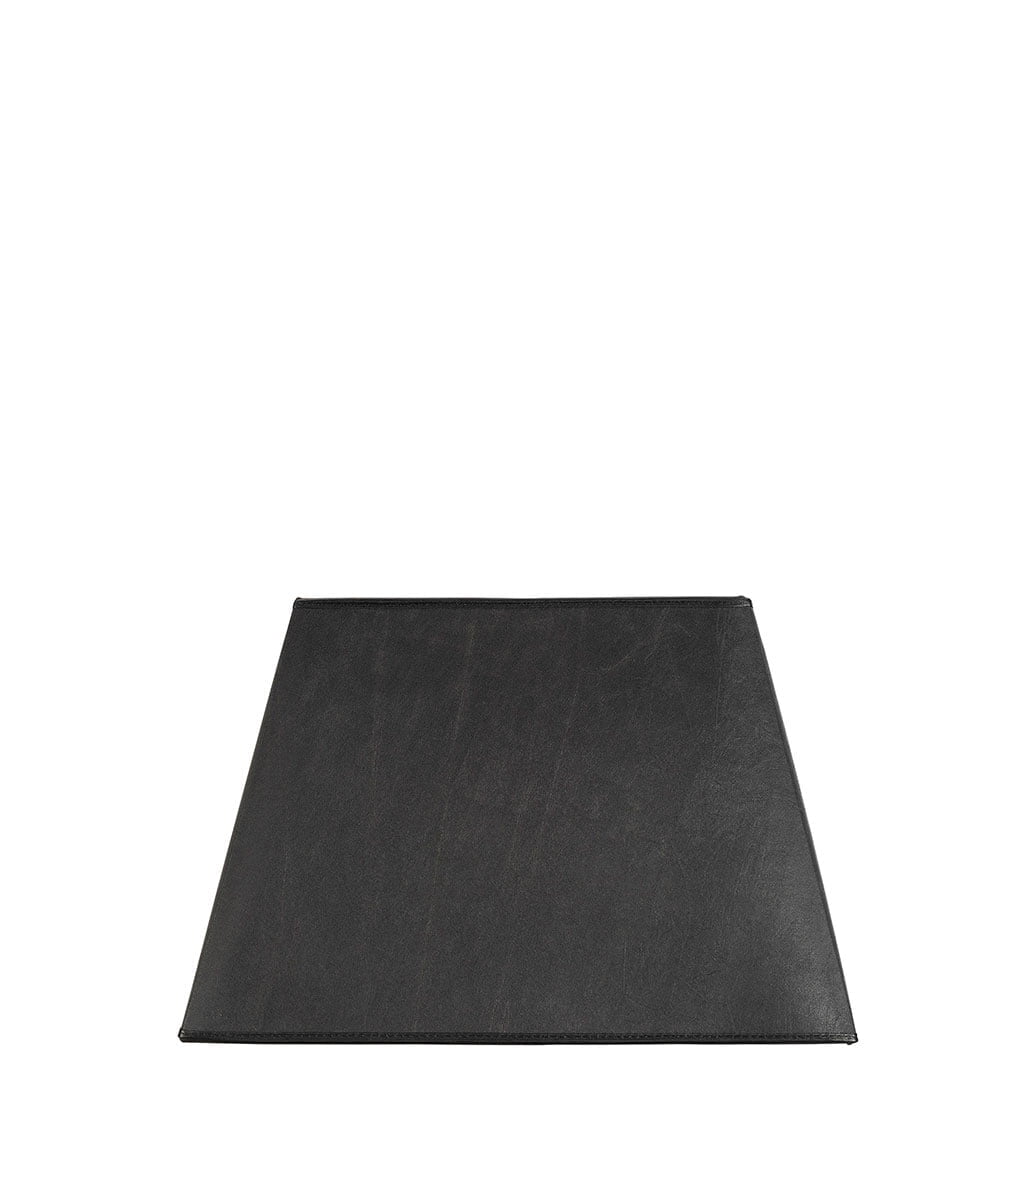 Artwood - Shade Square Black Leather